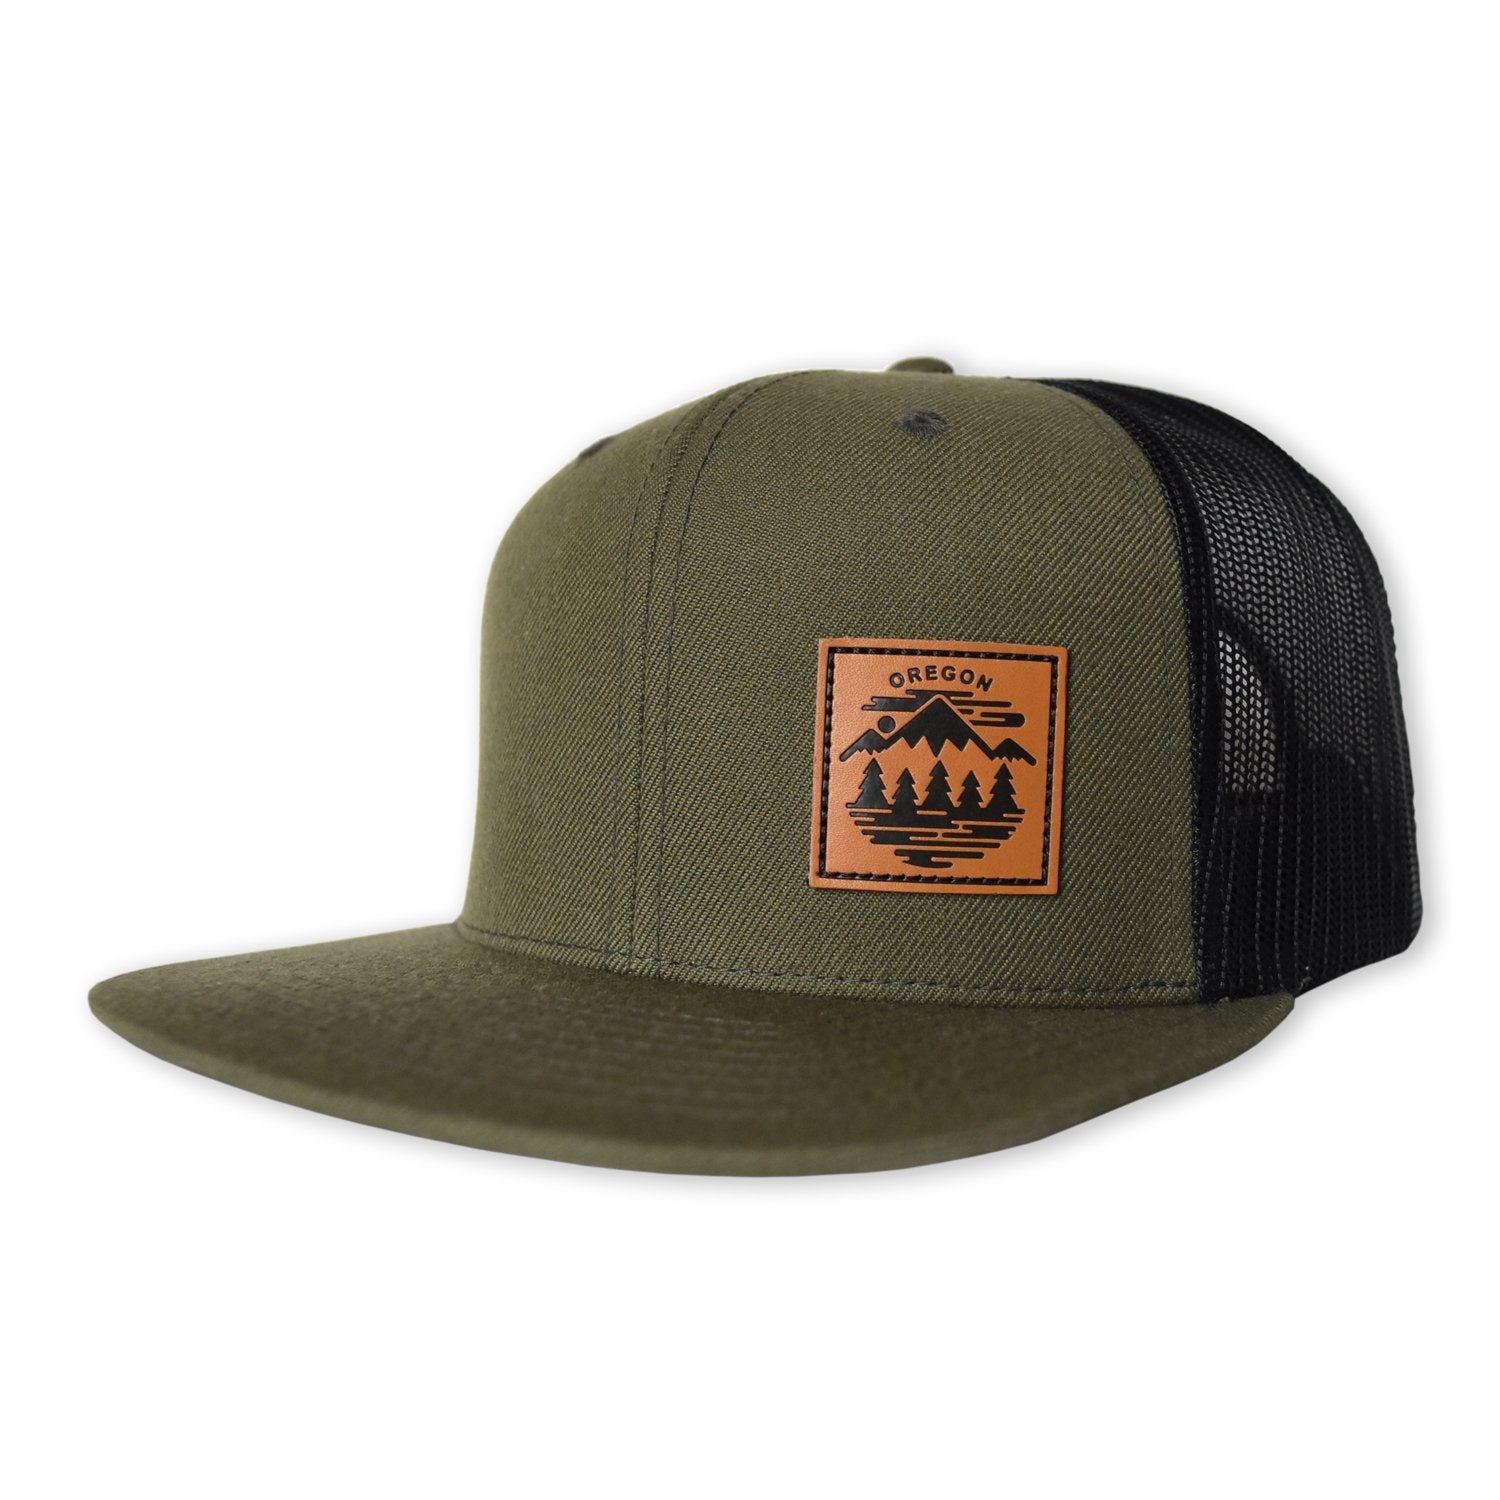 Oregon Fifty Ranges | Flat Billed Trucker Hat